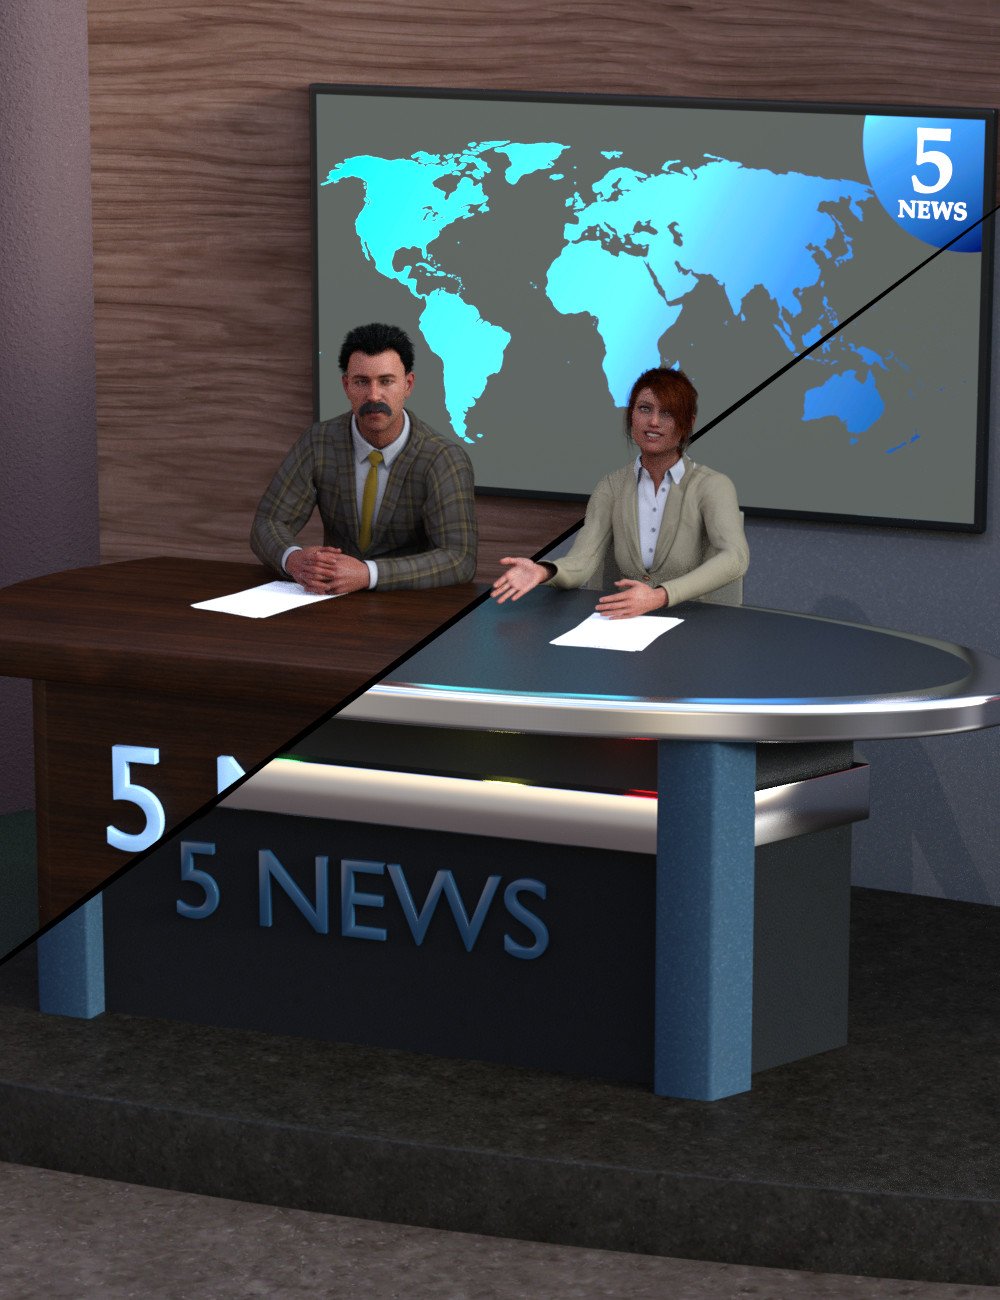 TV News Vignette by: Silent Winter, 3D Models by Daz 3D